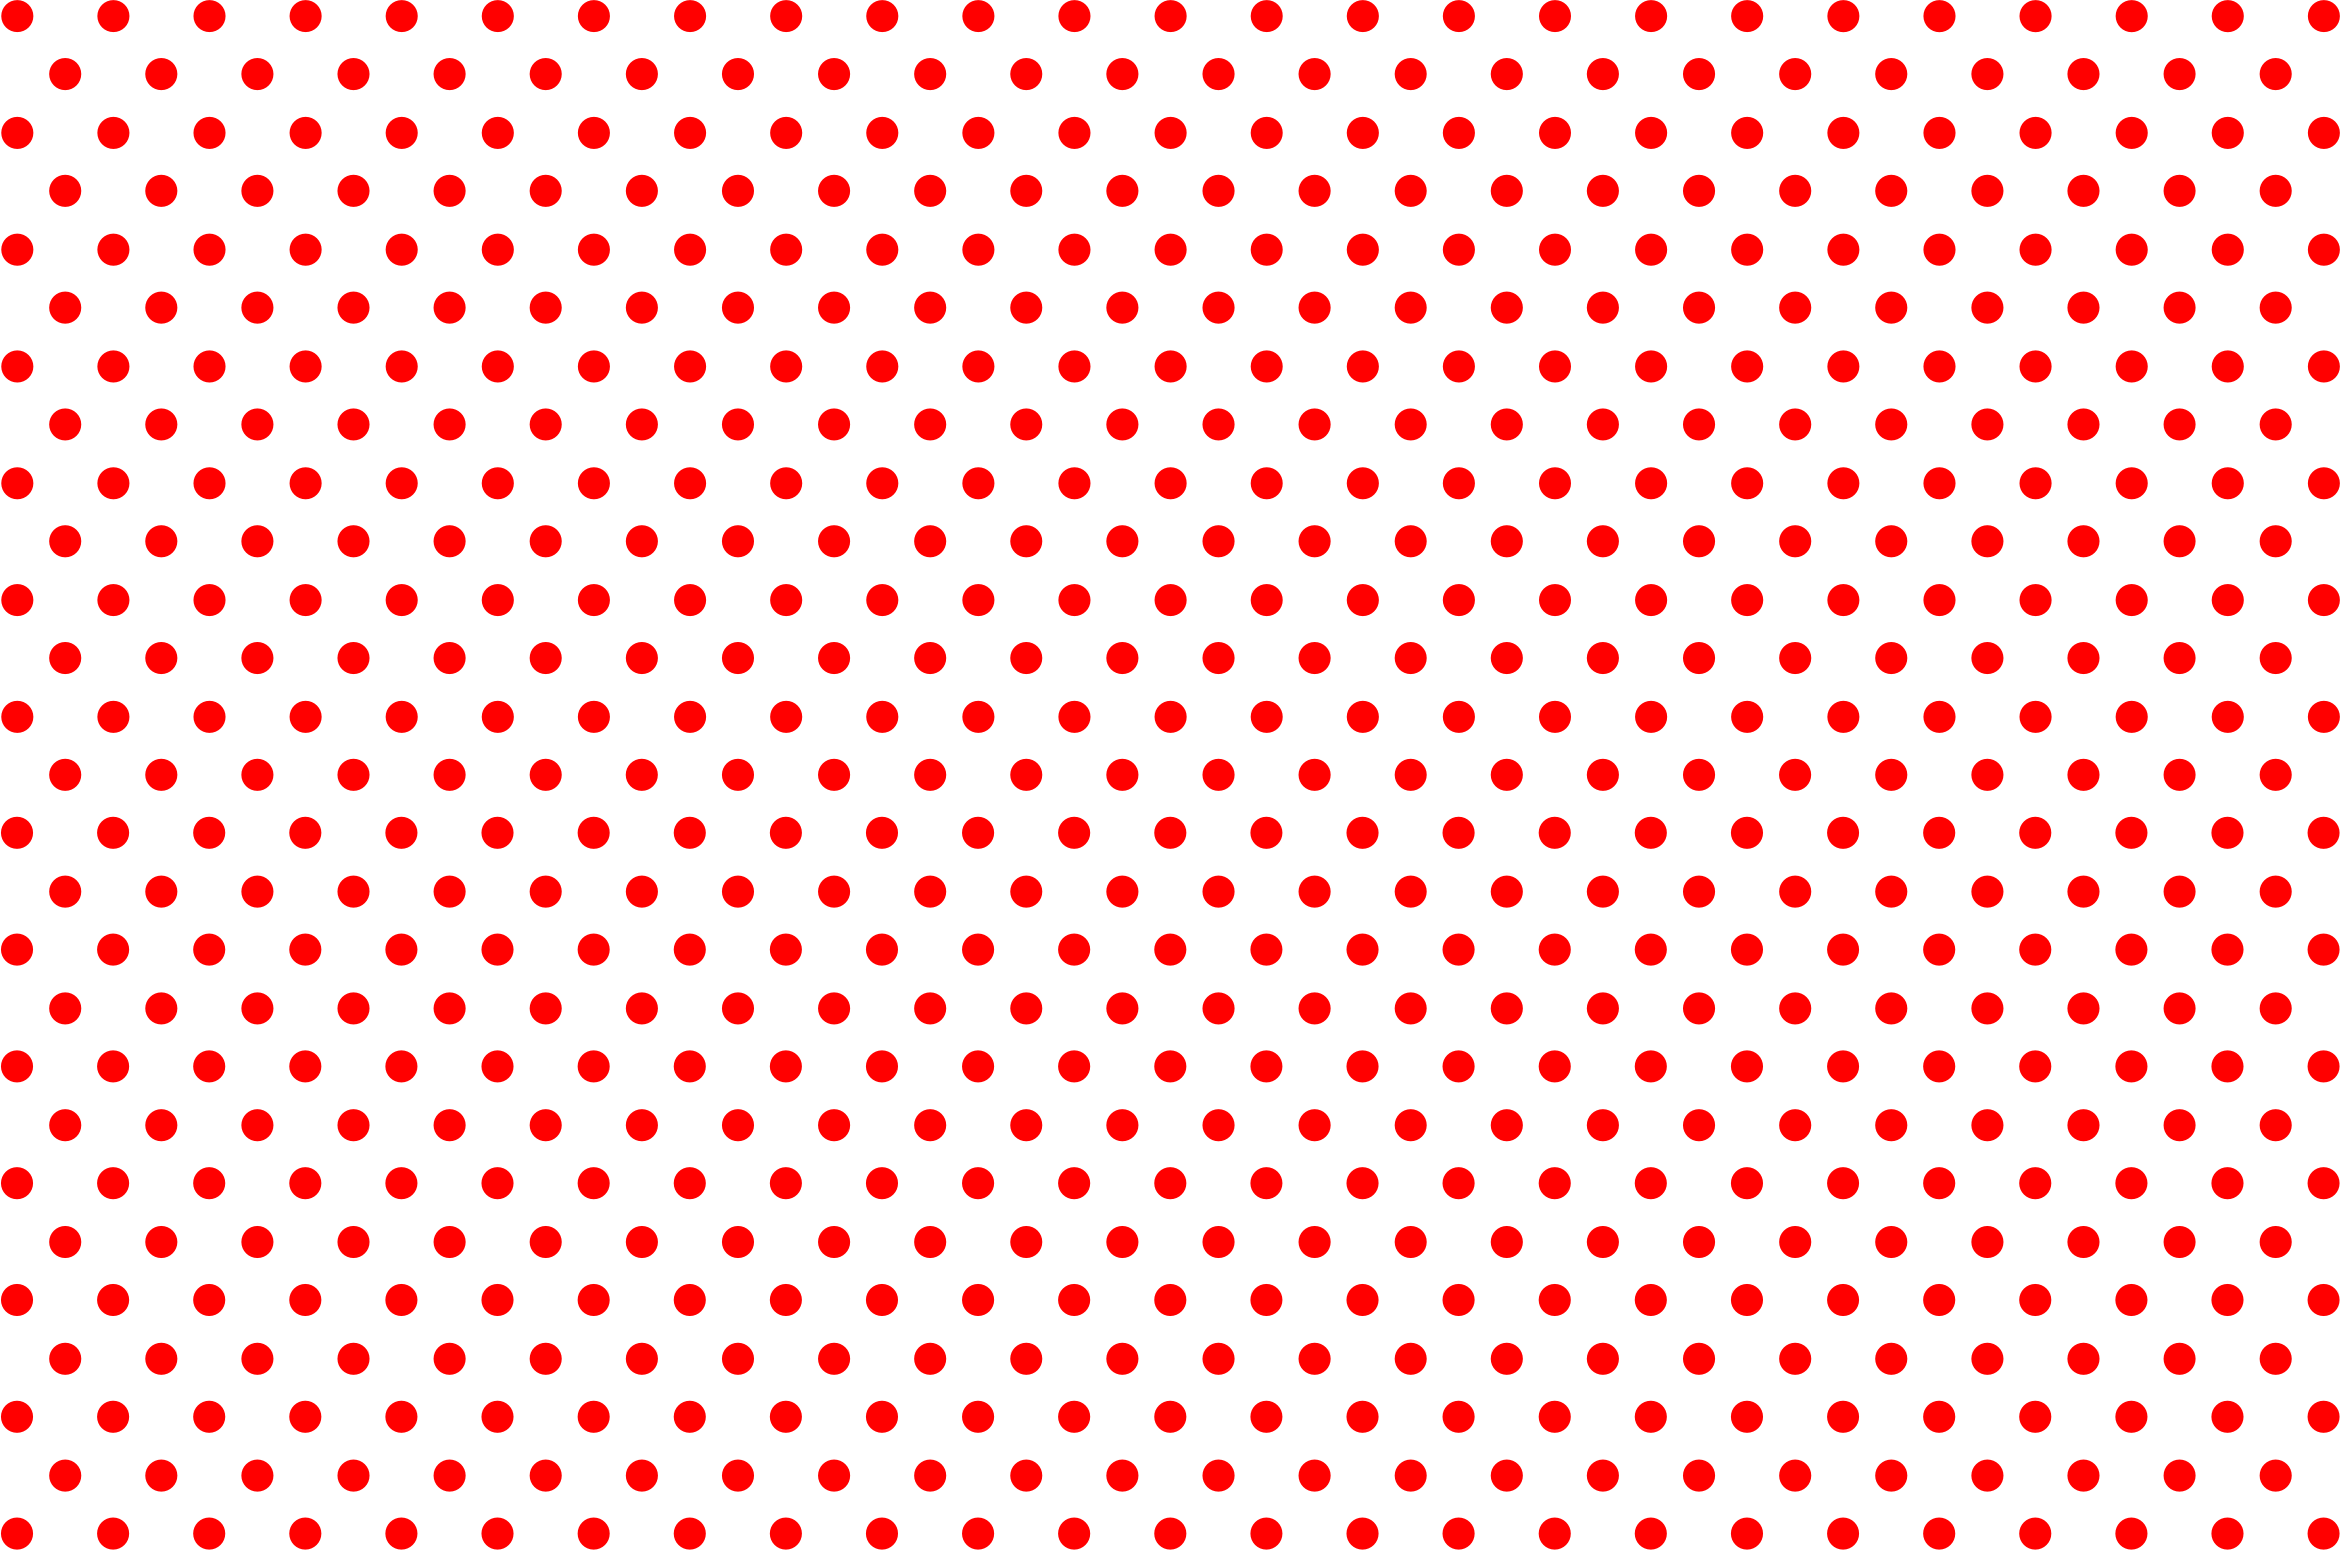 polka-dot background pattern 